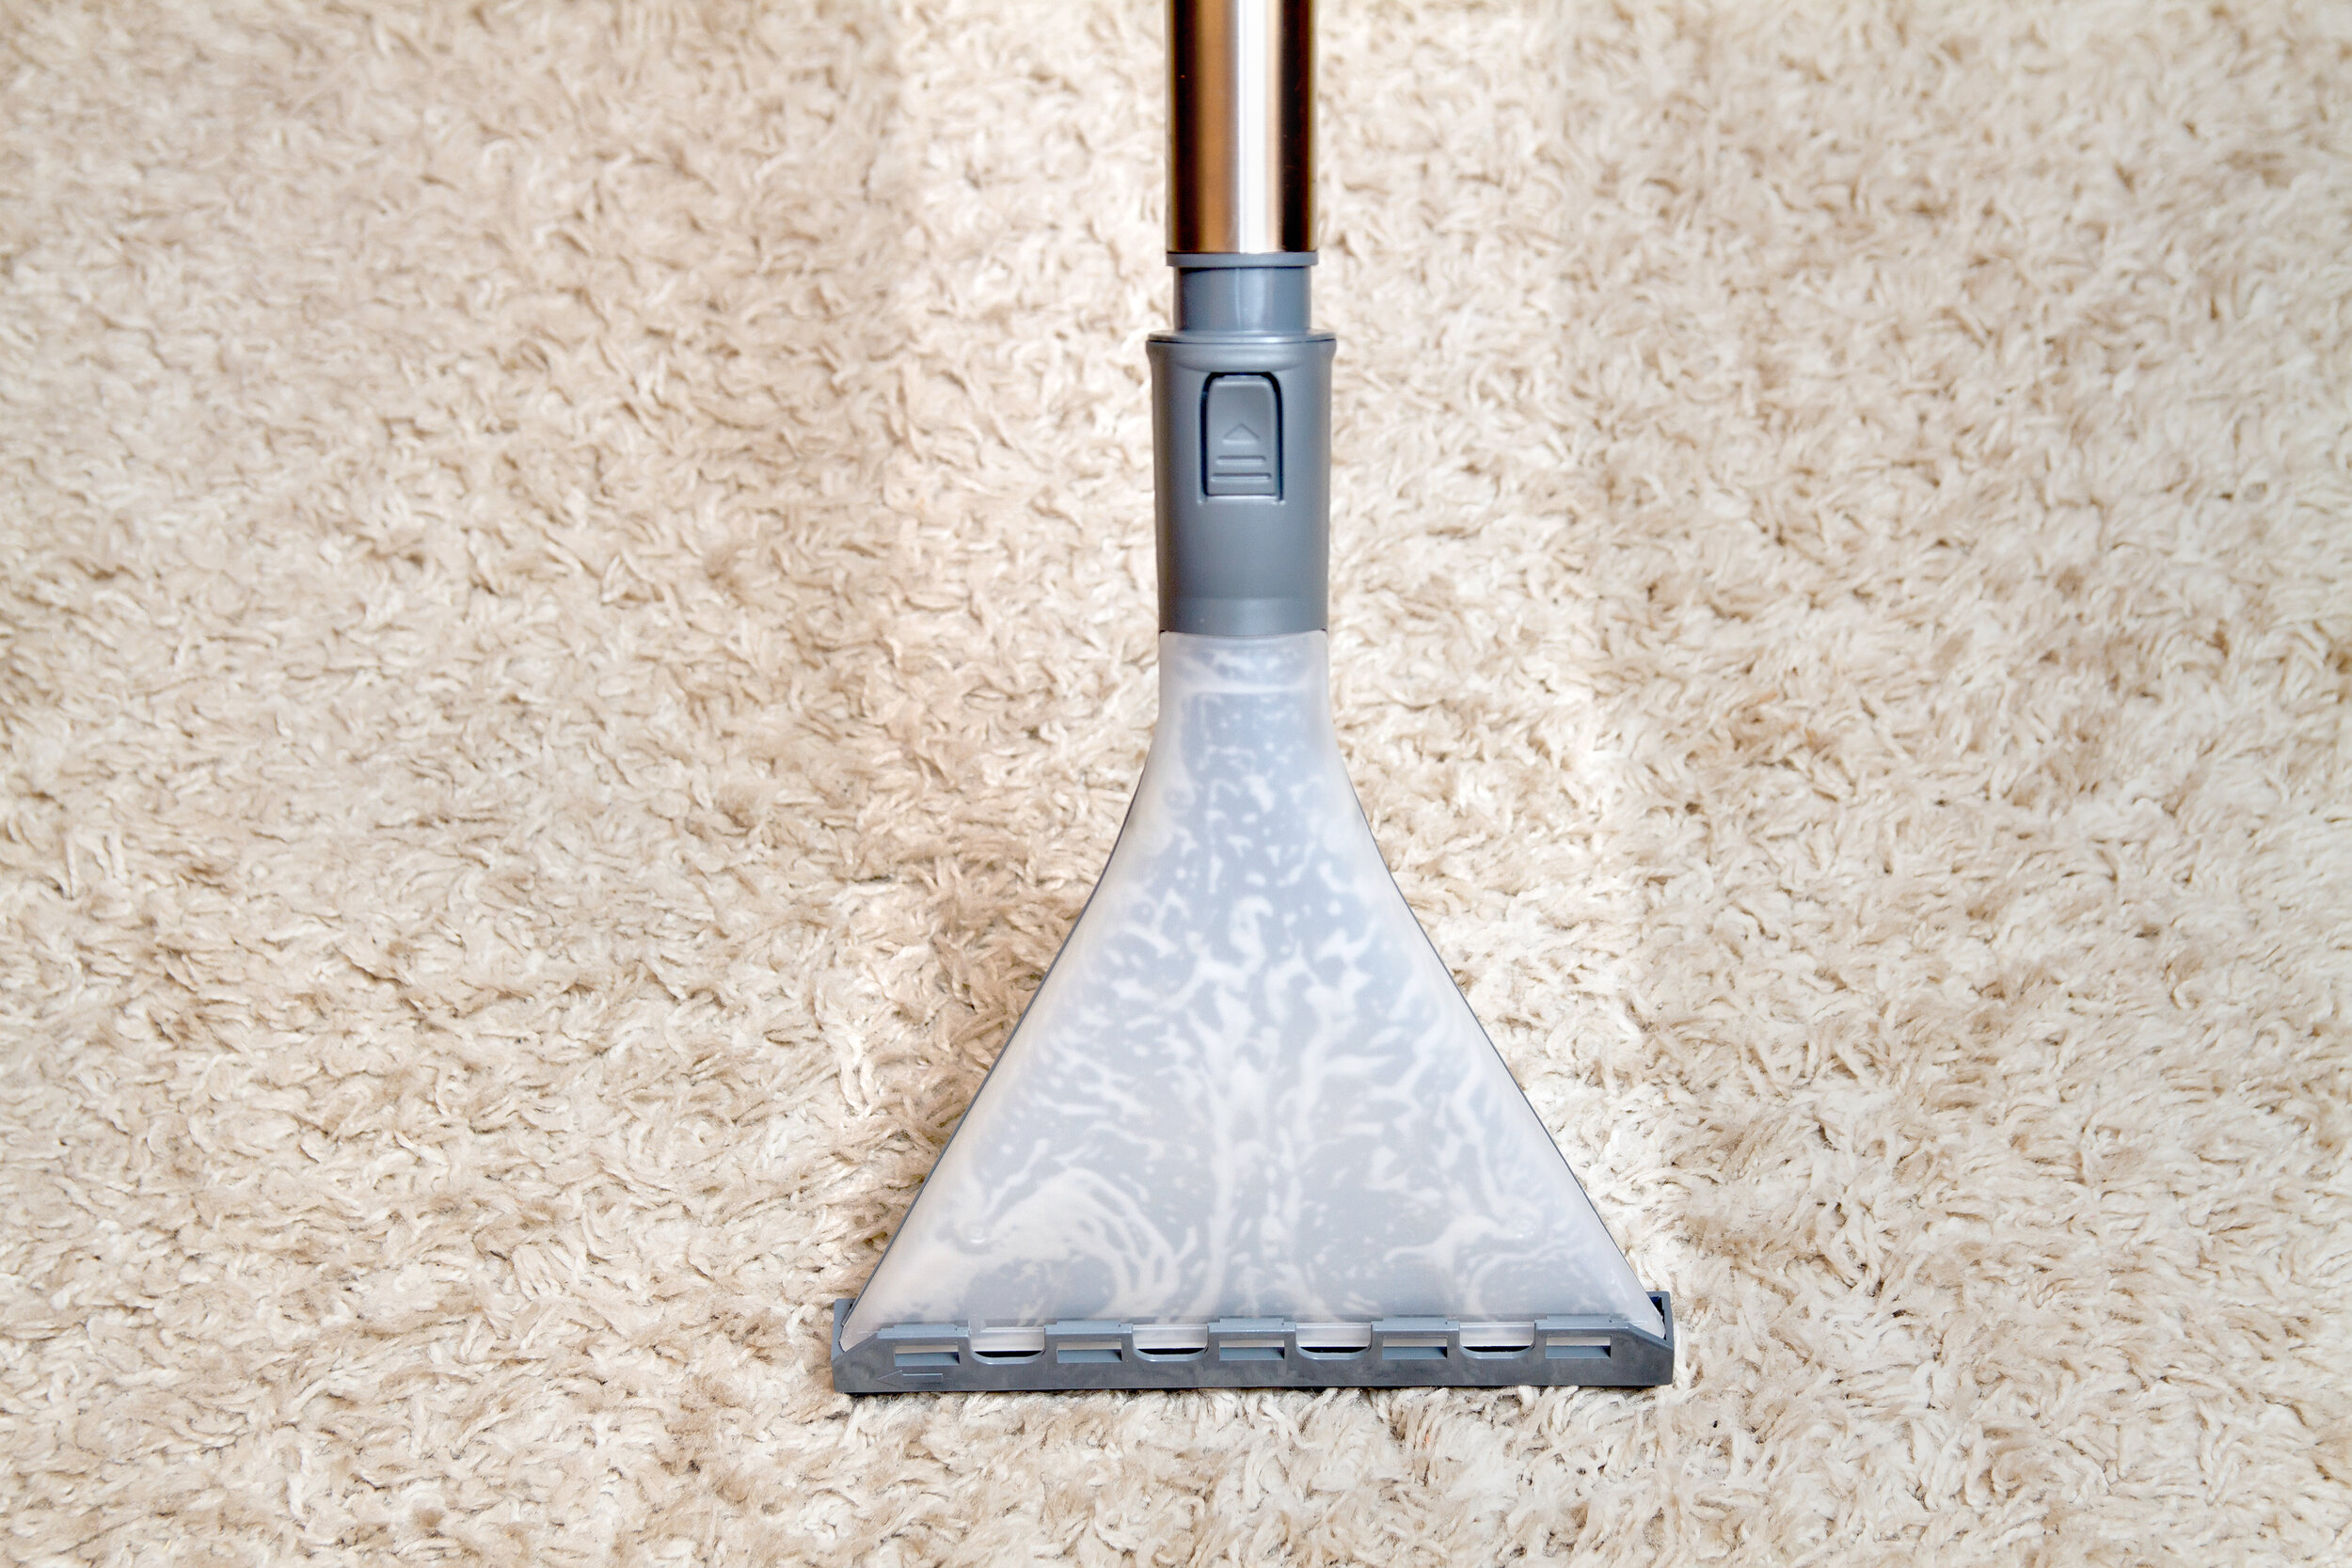 carpet-cleaning-vacuum-cleaner (1).jpg